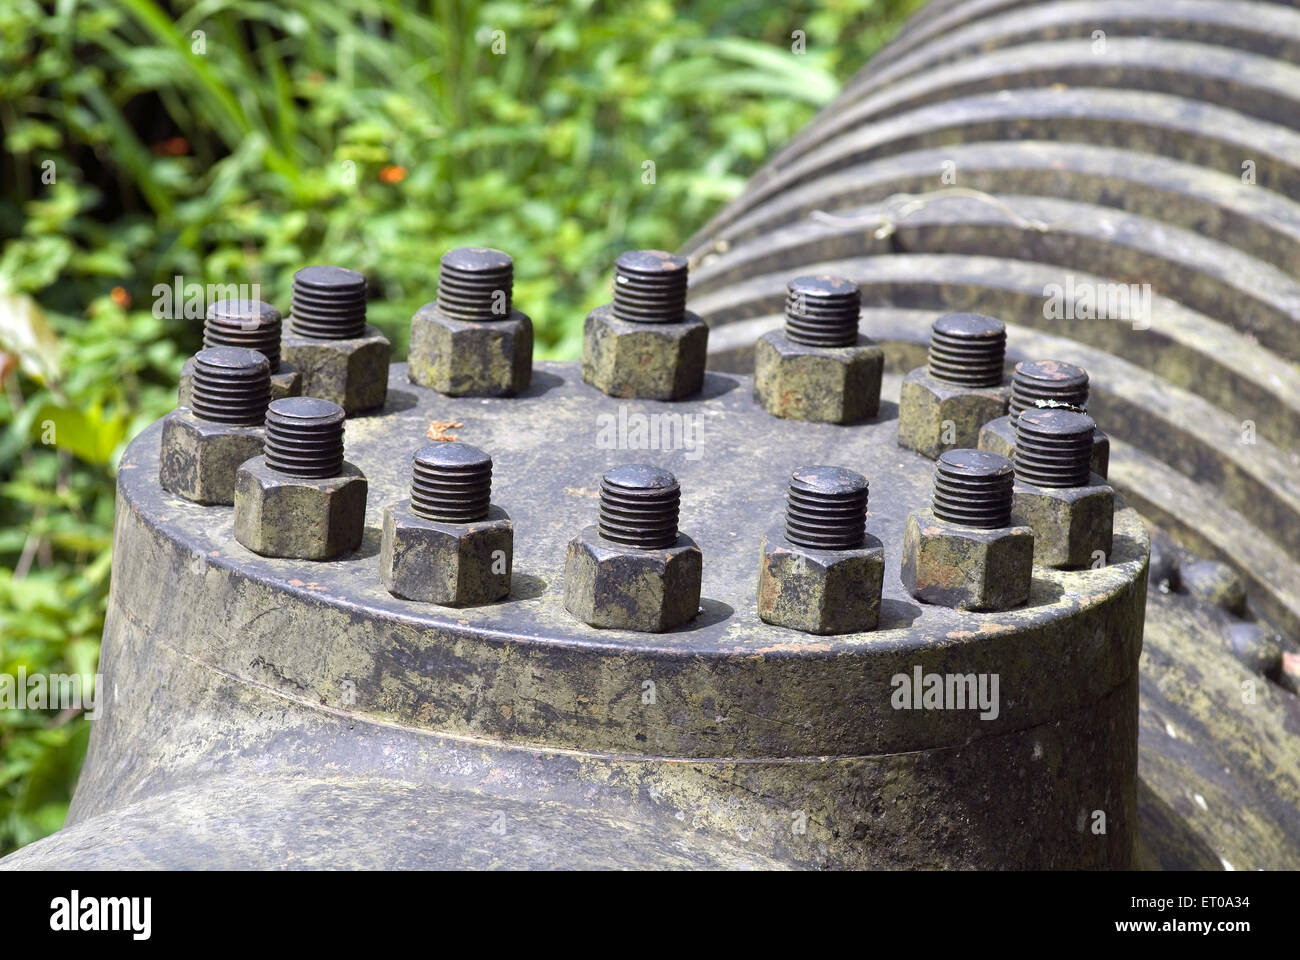 Nut and bolts, penstock pipes conveying water of Pykara River from Glenmorgan, Singara, Gudalur, Nilgiris, Tamil Nadu, India, Asia Stock Photo